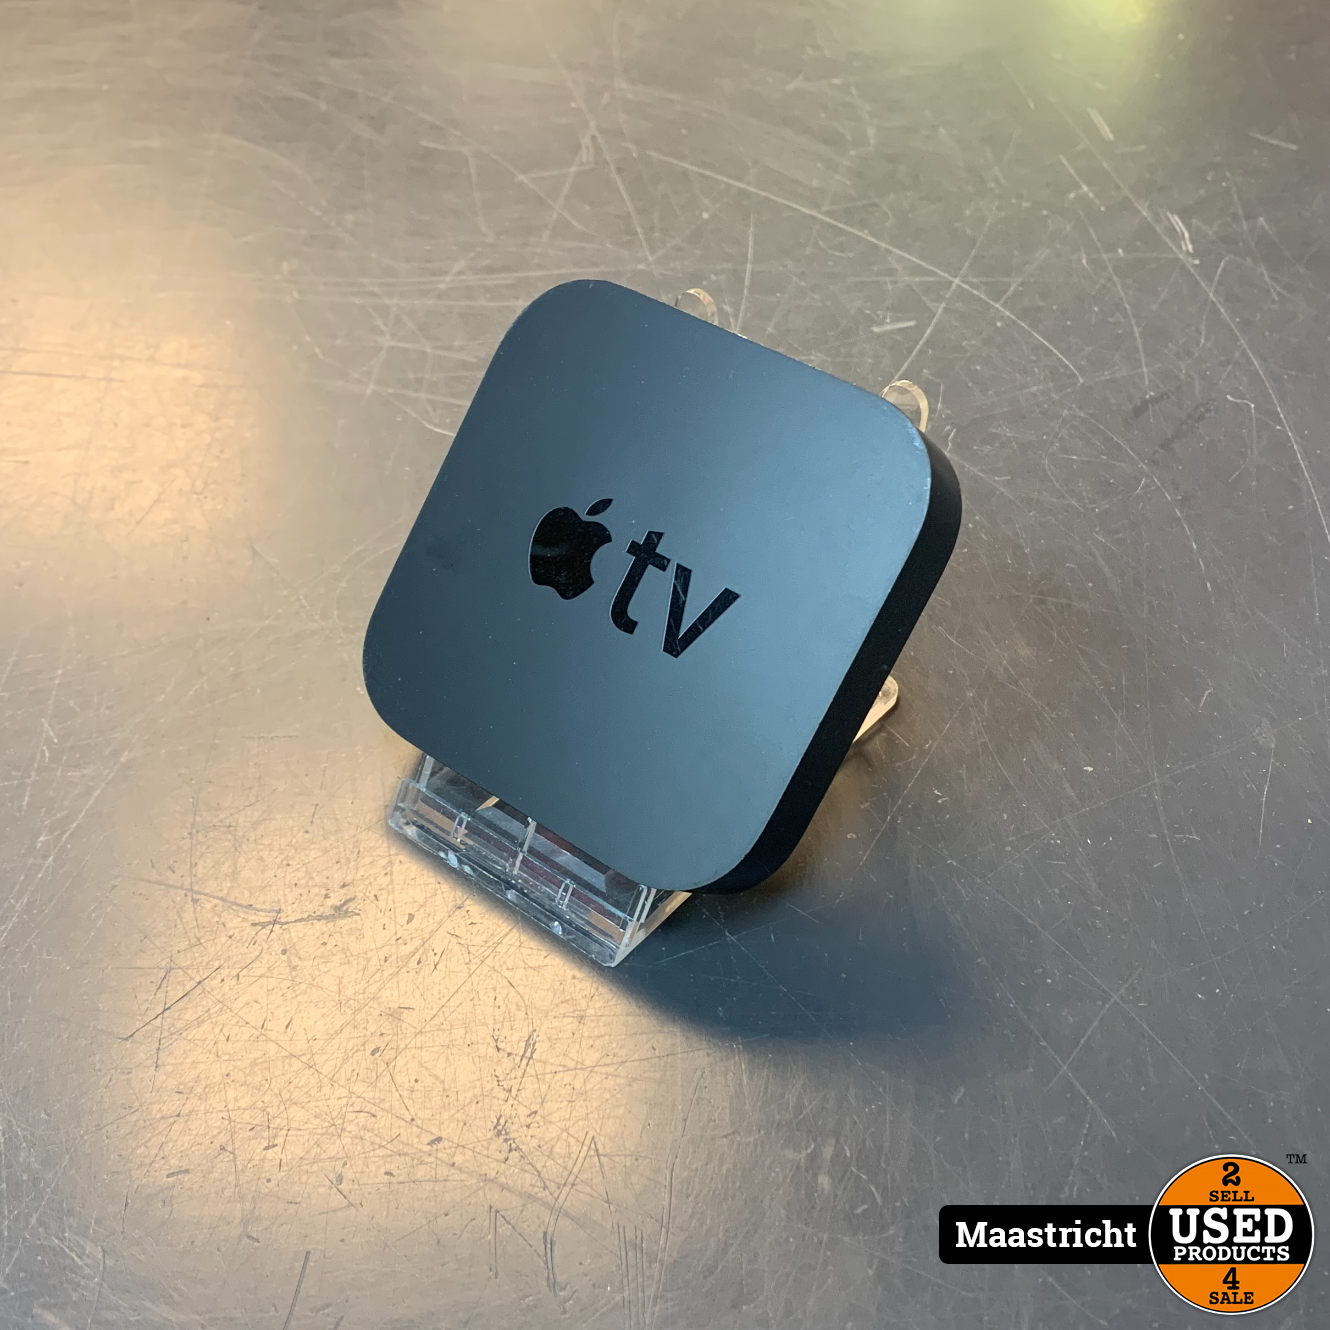 Pretentieloos Pluche pop genoeg Apple TV3 Model A1469 (zonder remote) - Used Products Maasstricht